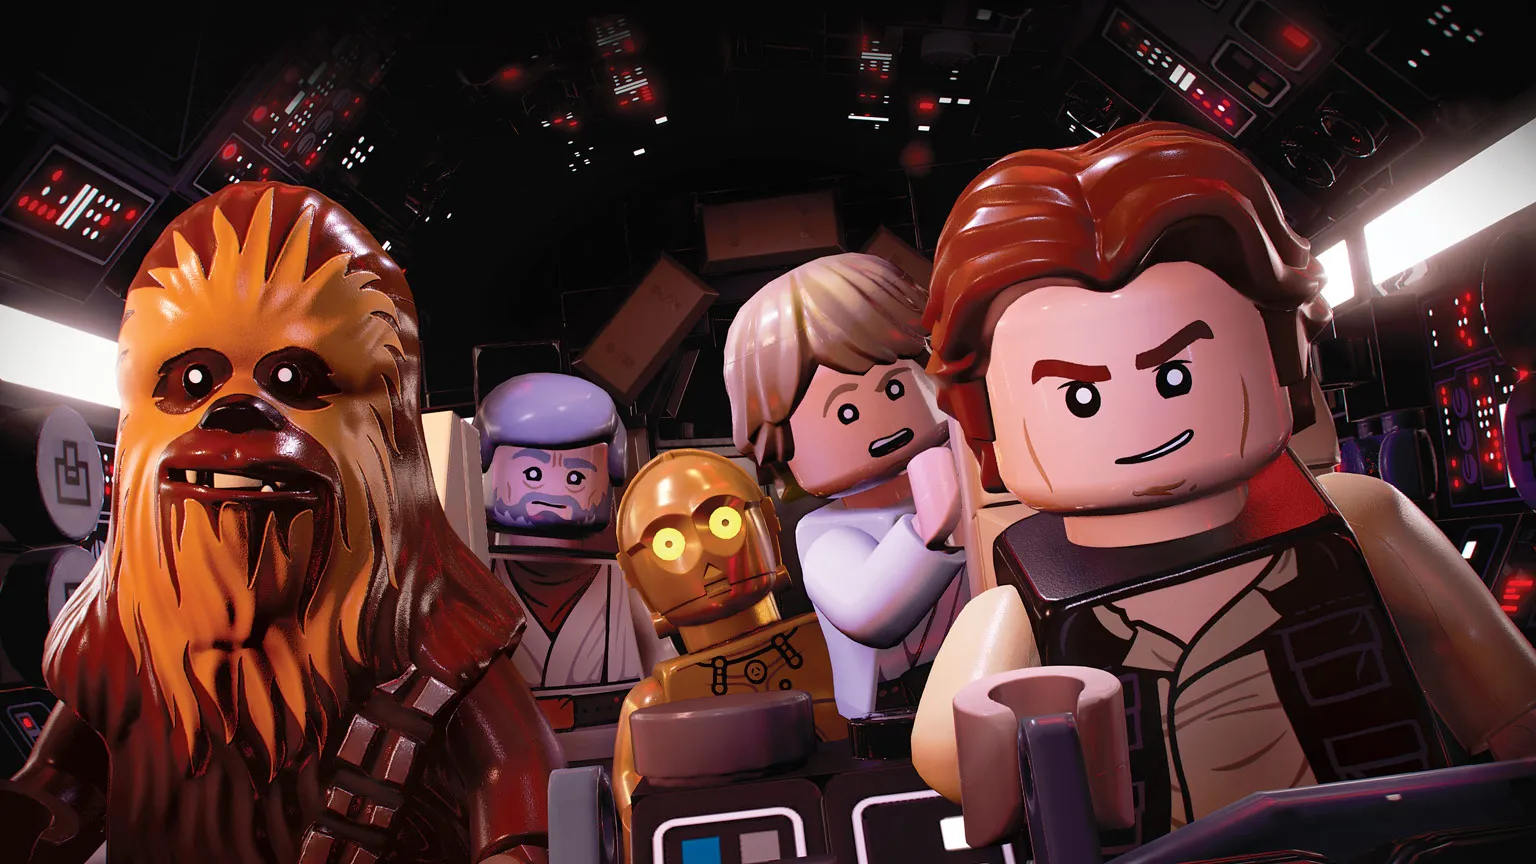 News - Can I Play LEGO Star Wars: The Skywalker Saga on PC